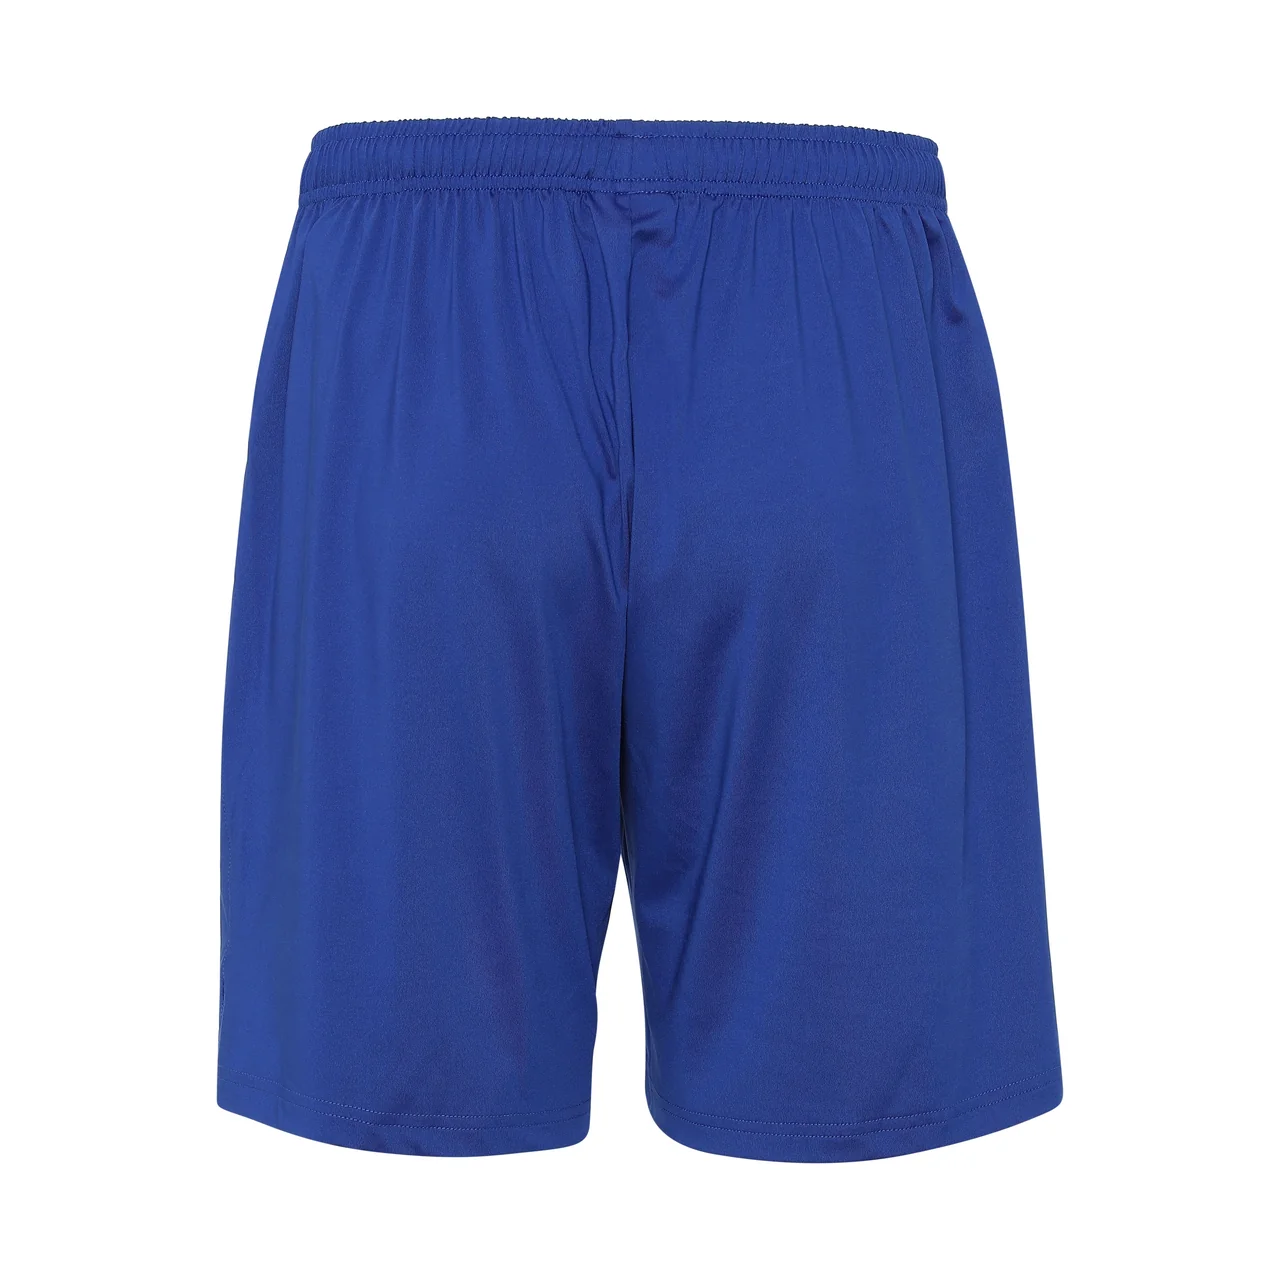 Yonex Uni Shorts Pacific Blue Men